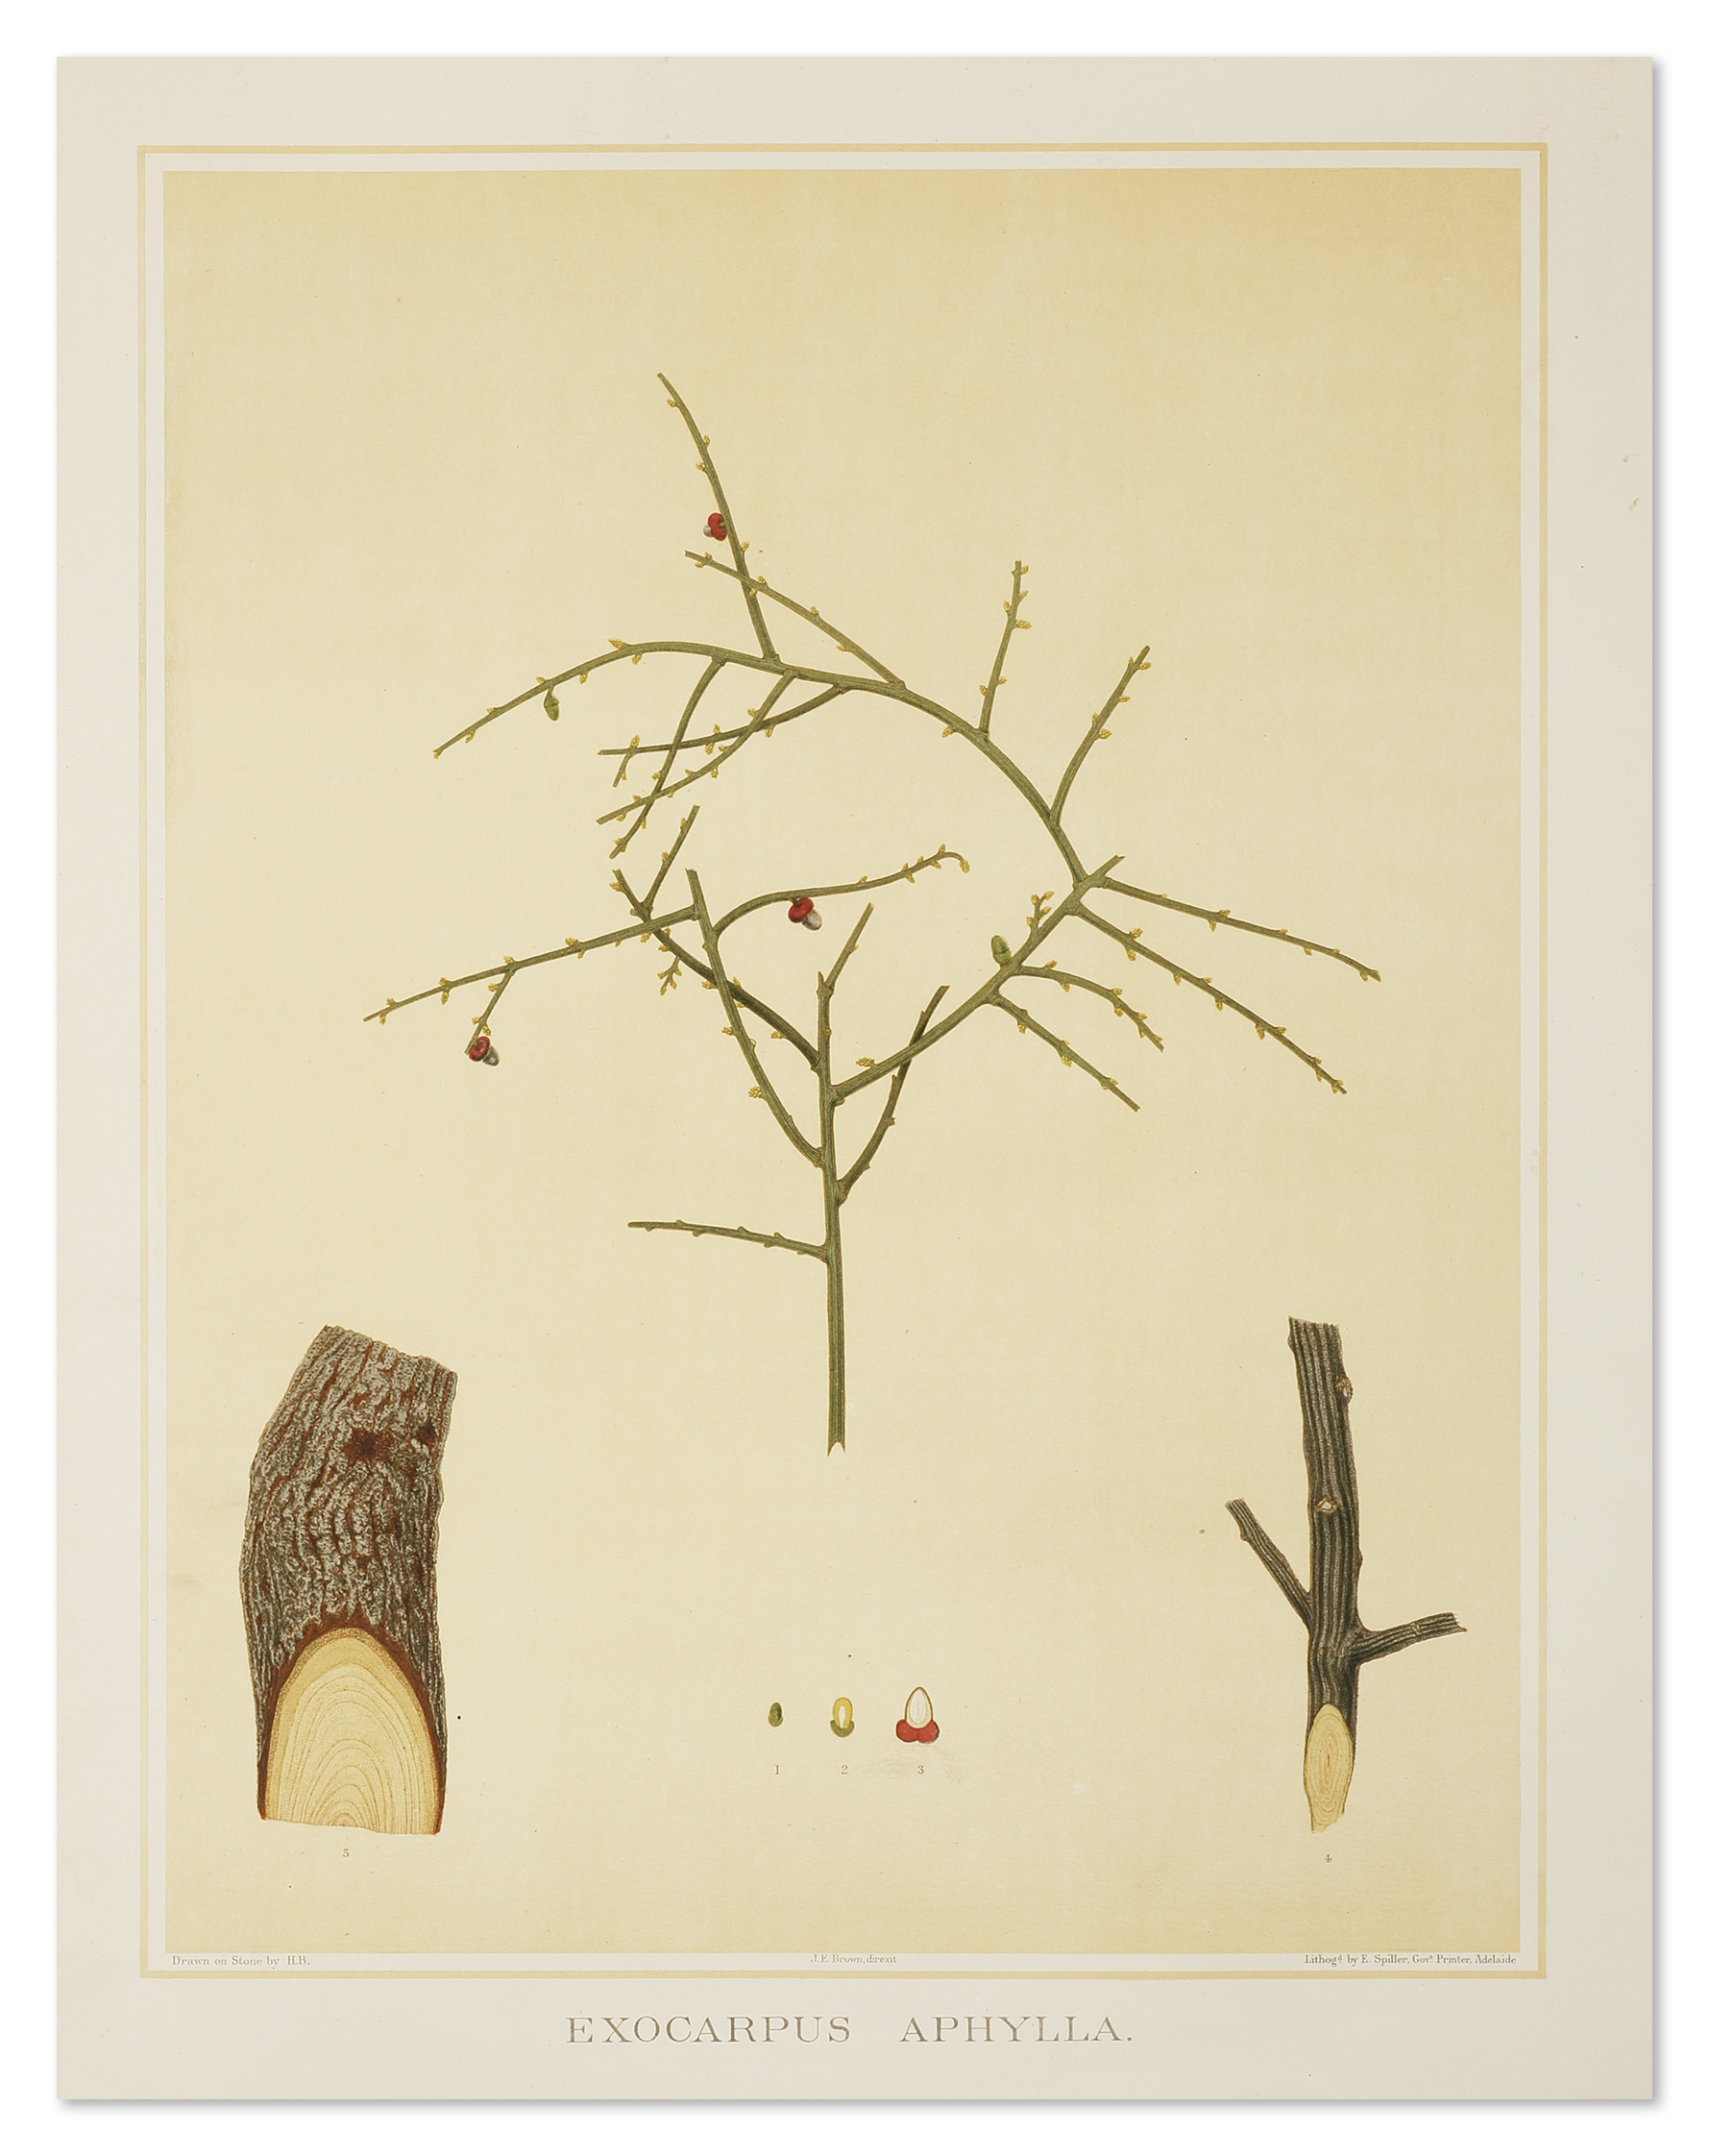 Exocarpus Aphylla - Antique Print from 1882